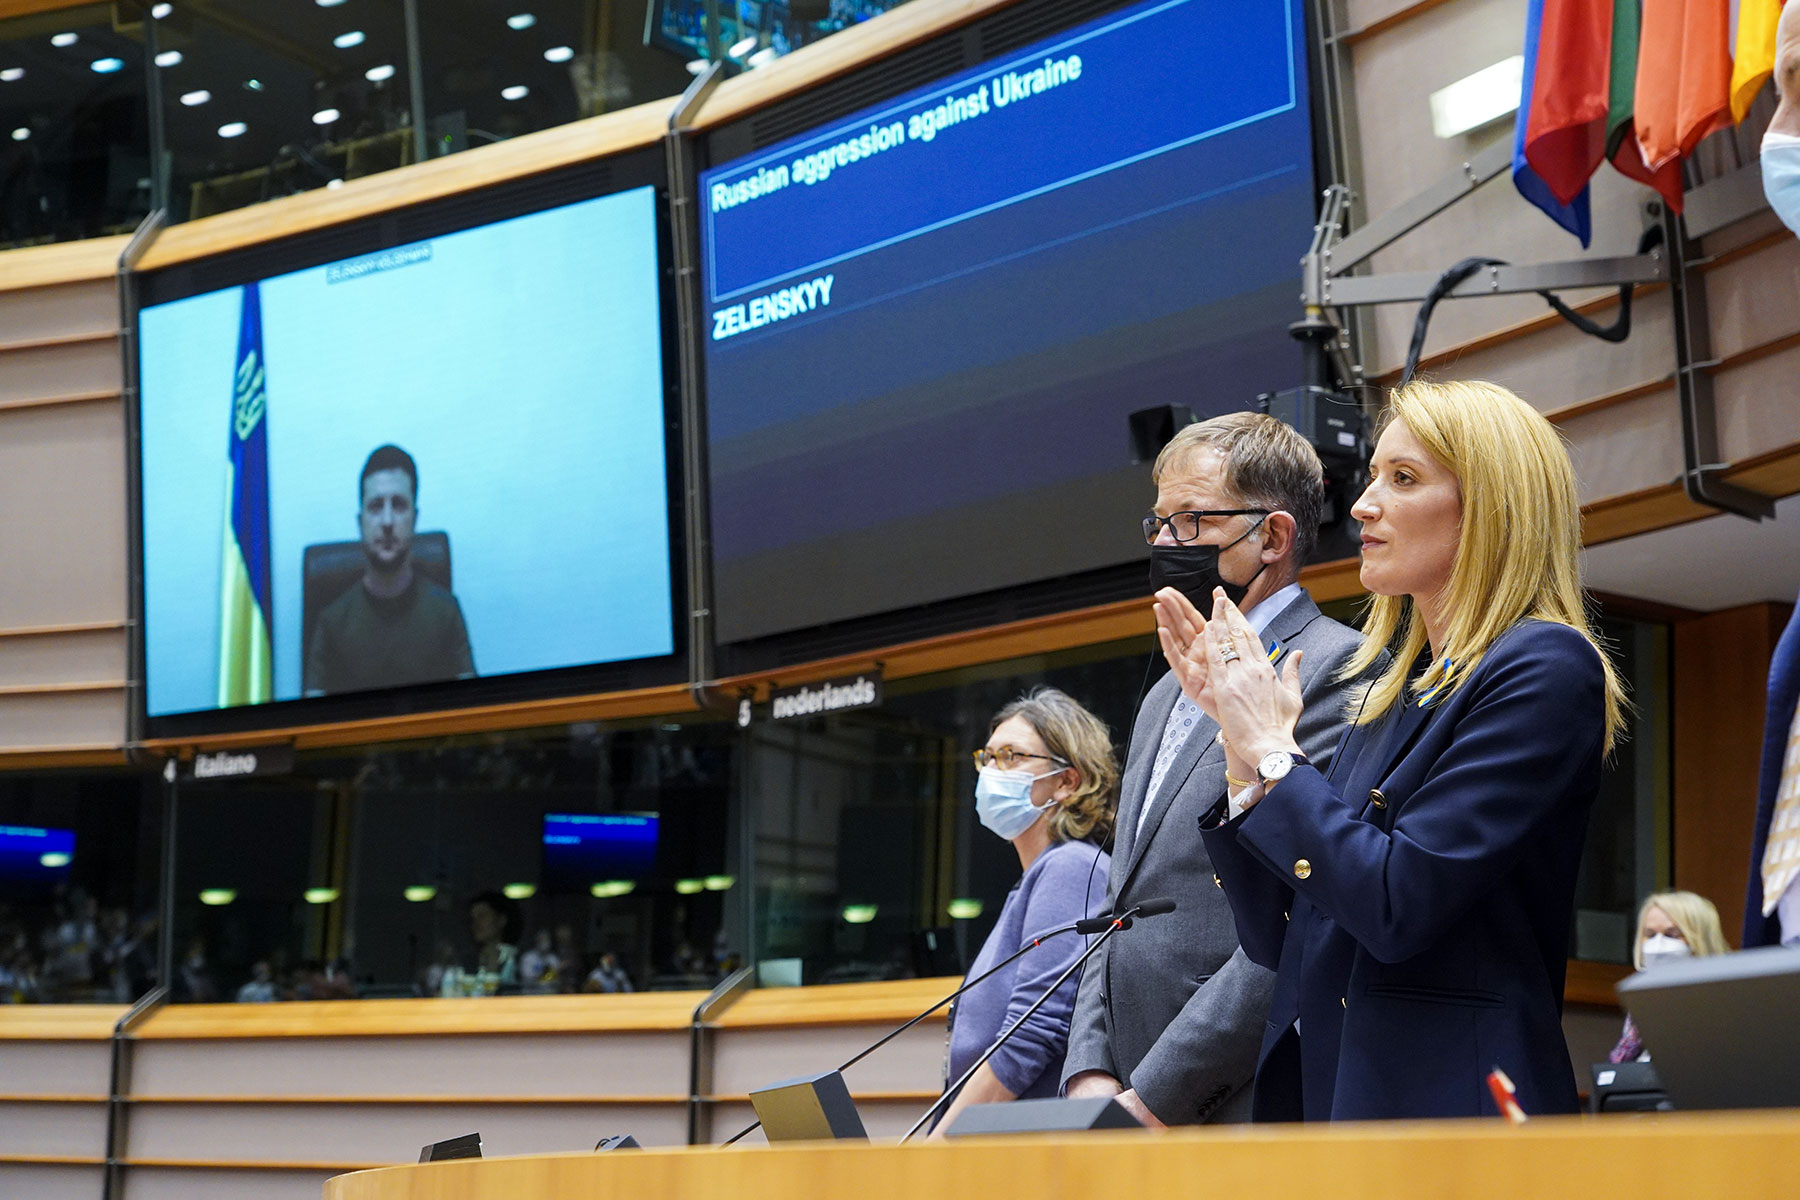 The European Parliament responding to the speech by President Volodymyr Zelenskyy regarding Russia's invasion of Ukraine, 1 March 2022 (Photo: europarl.europa.eu)